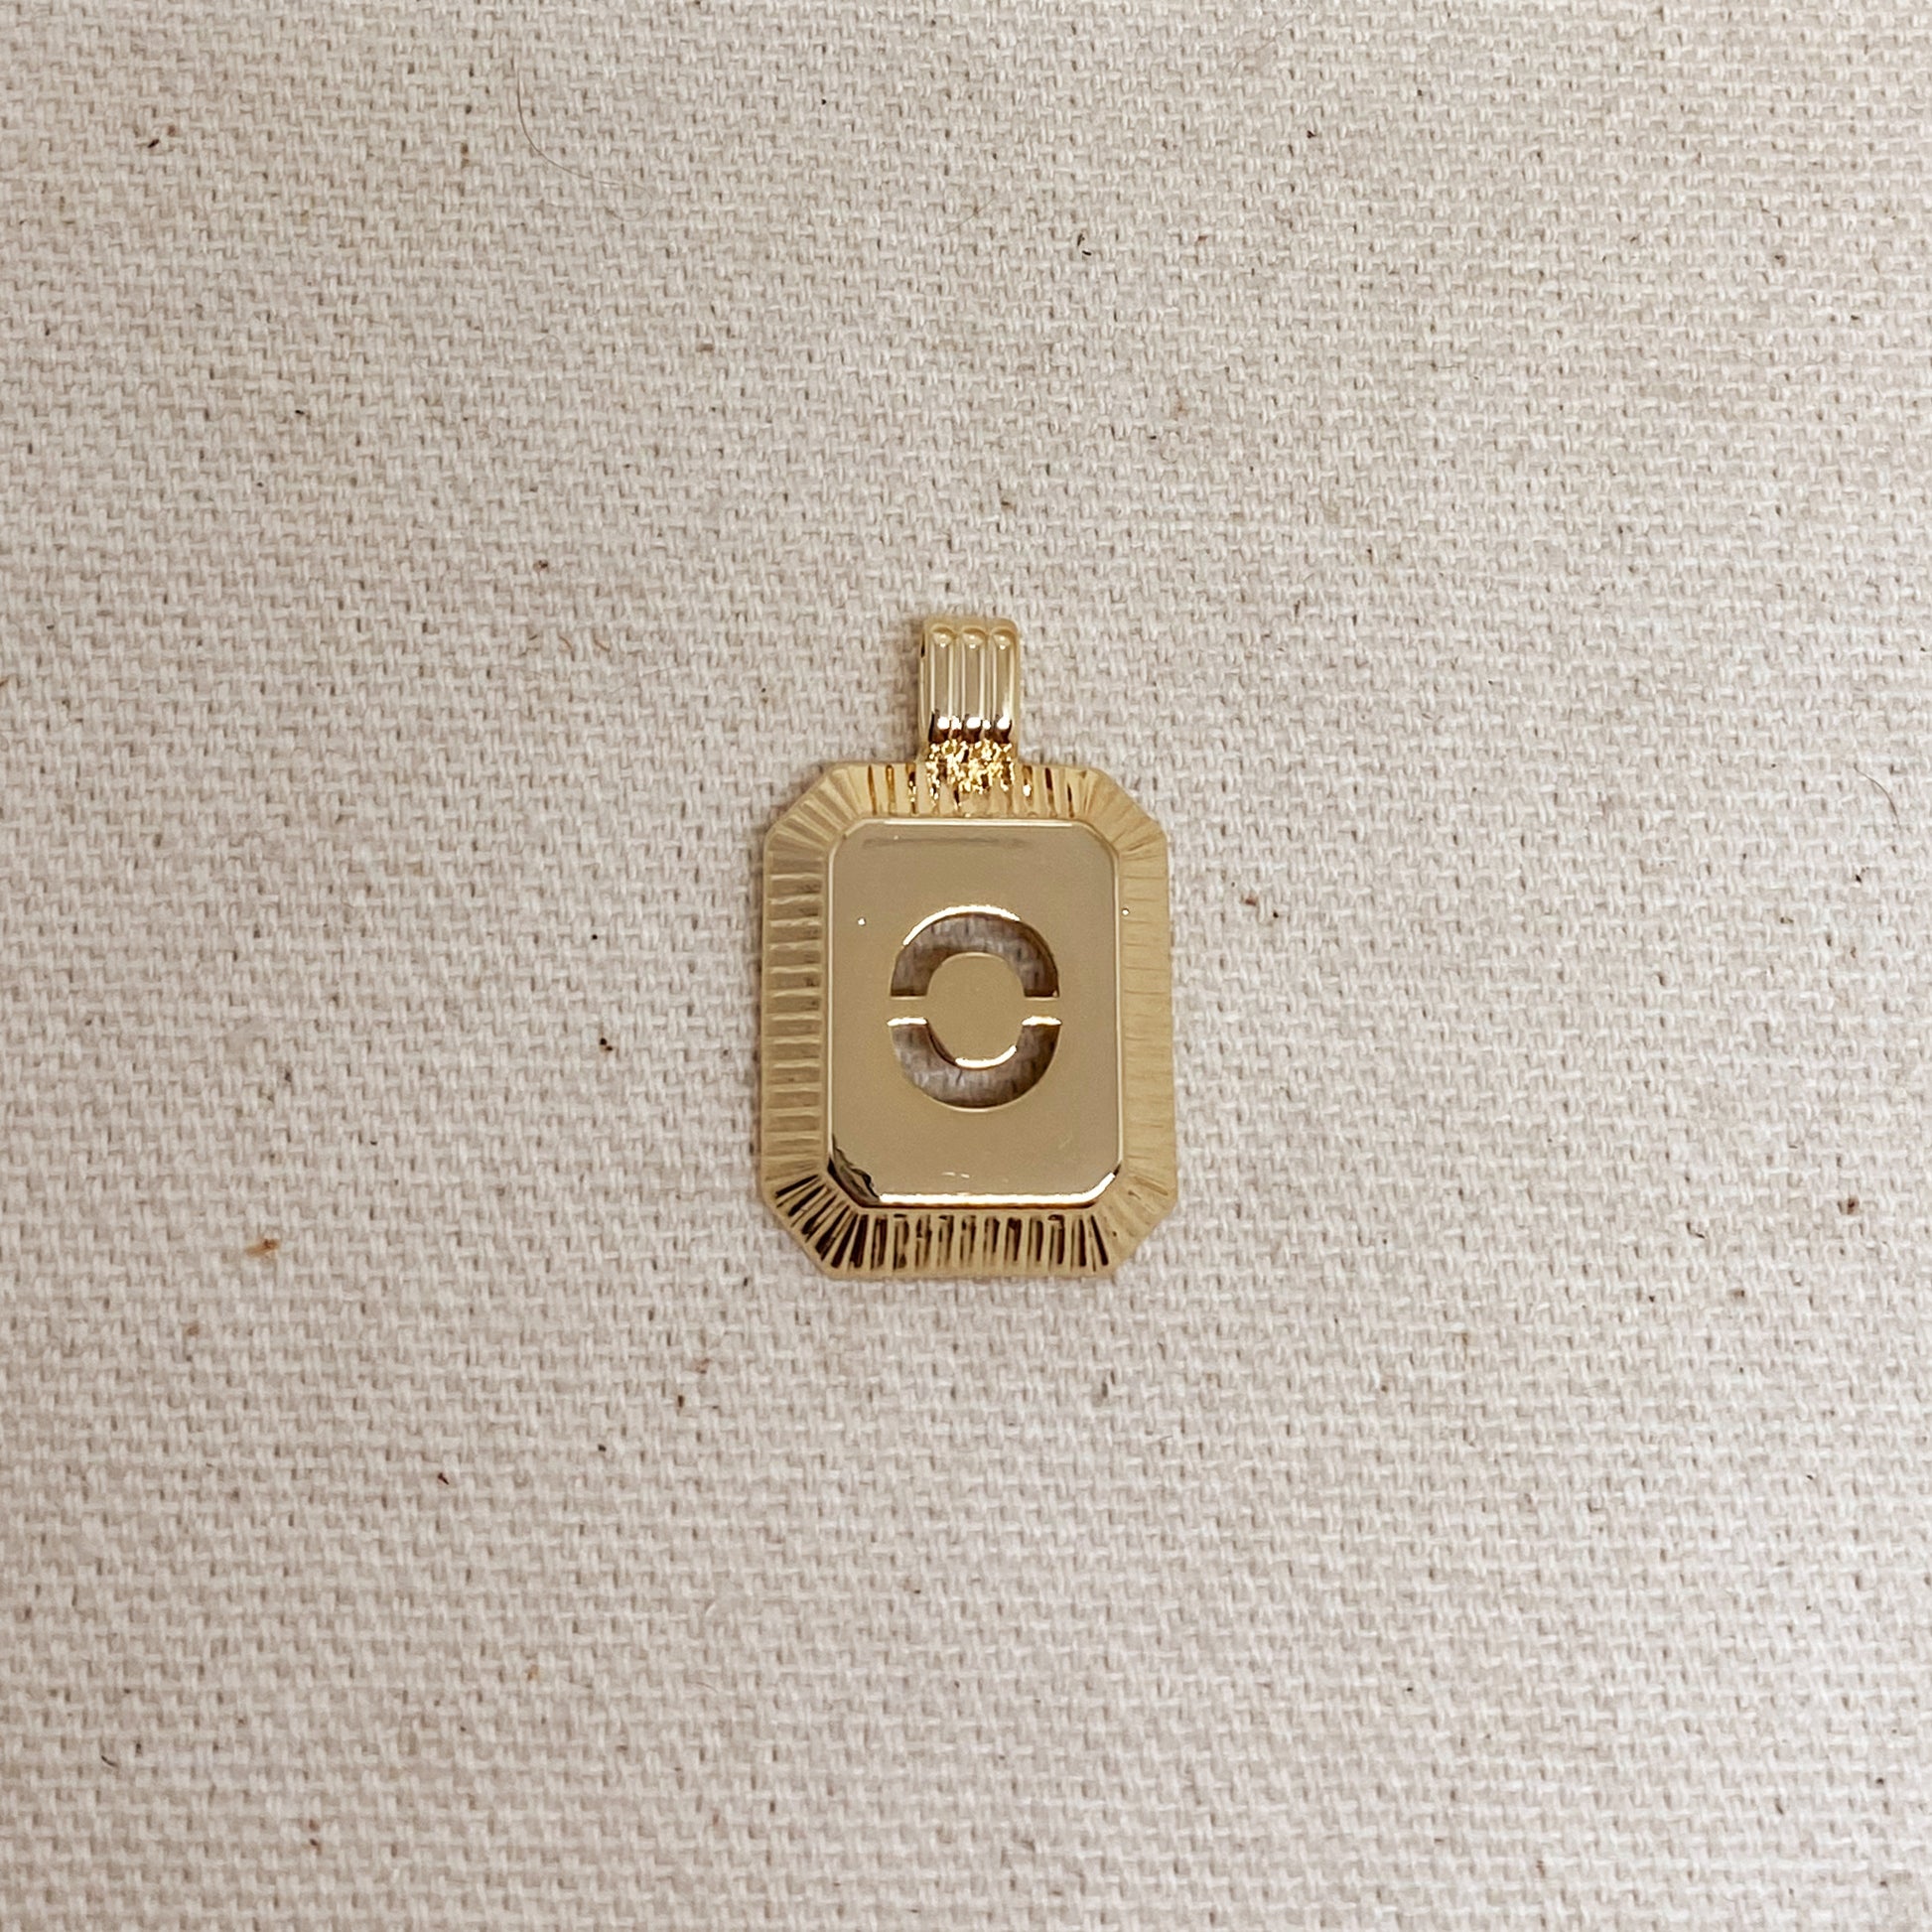 GoldFi 18k Gold Filled Initial Plate Pendant Letter O